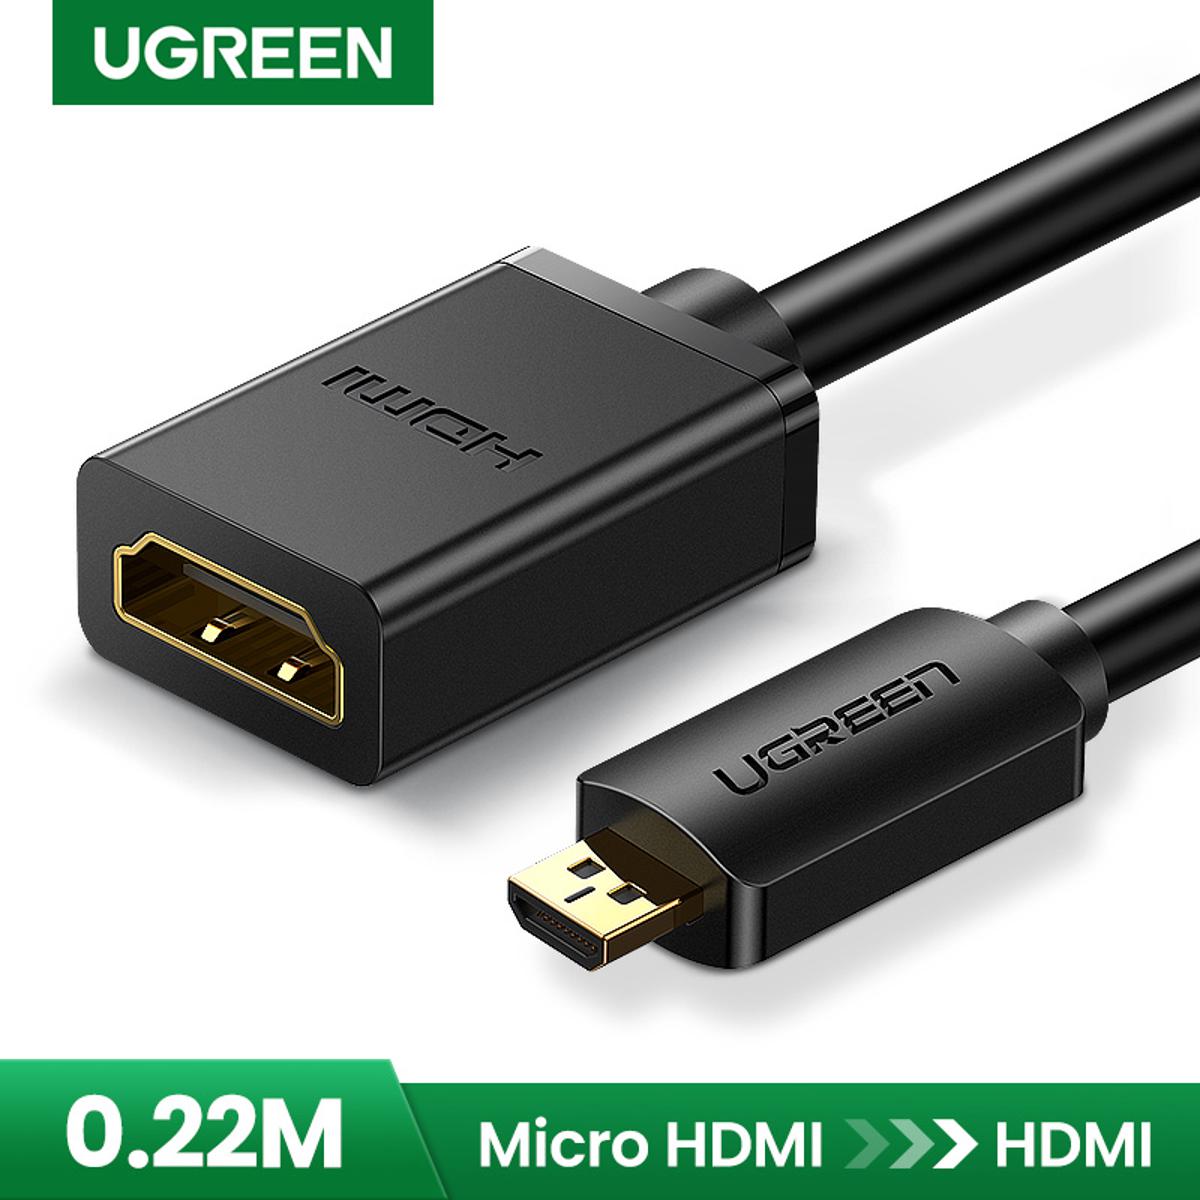 Ugreen Micro HDMI Adapter HD4K Micro HDMI Male to HDMI Female Cable Connector Converter for Raspberry Pi 4 GoPro HDMI Micro